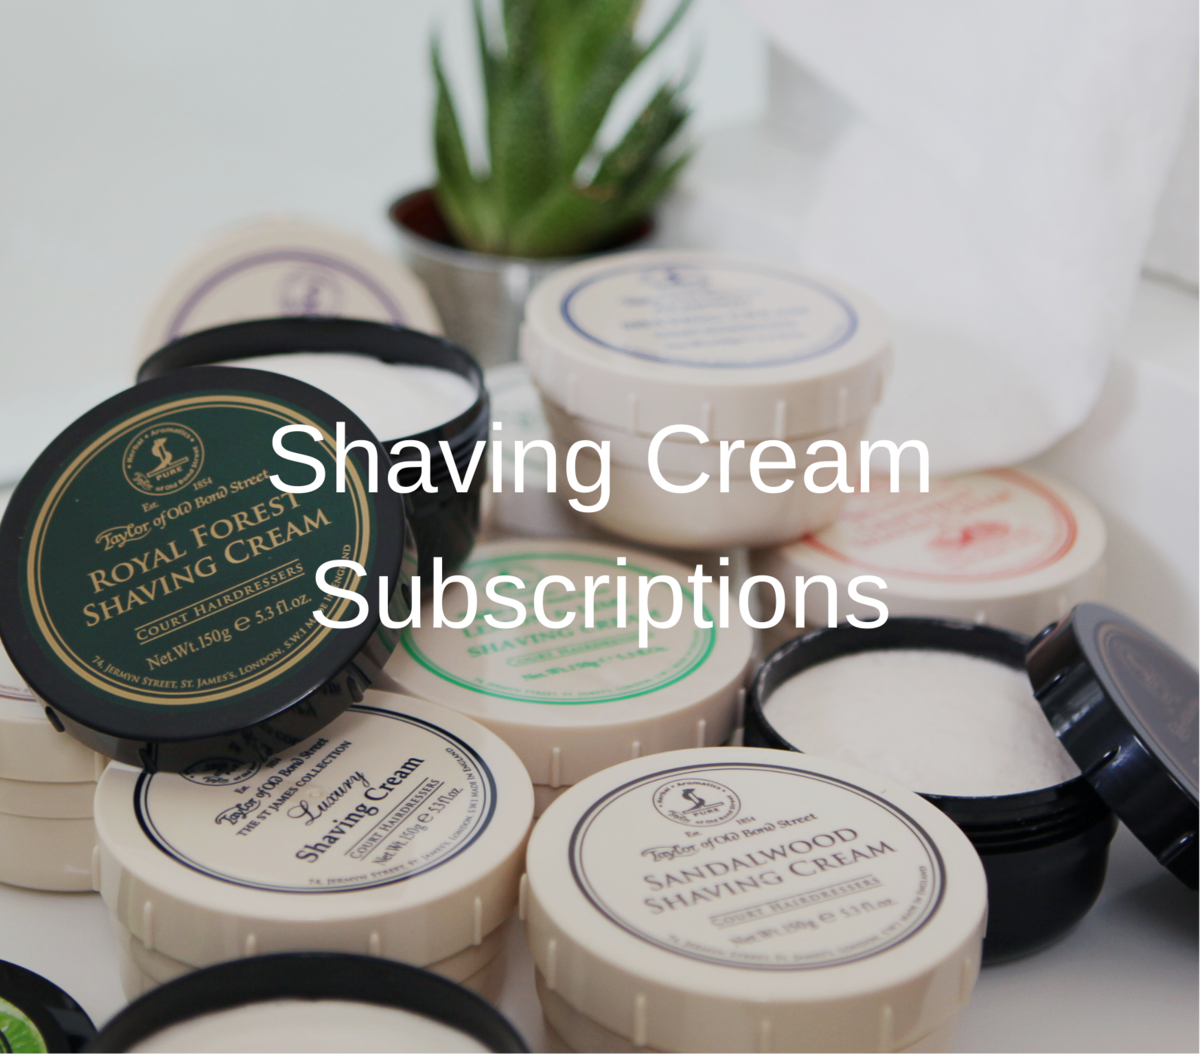 Shaving Cream subscription